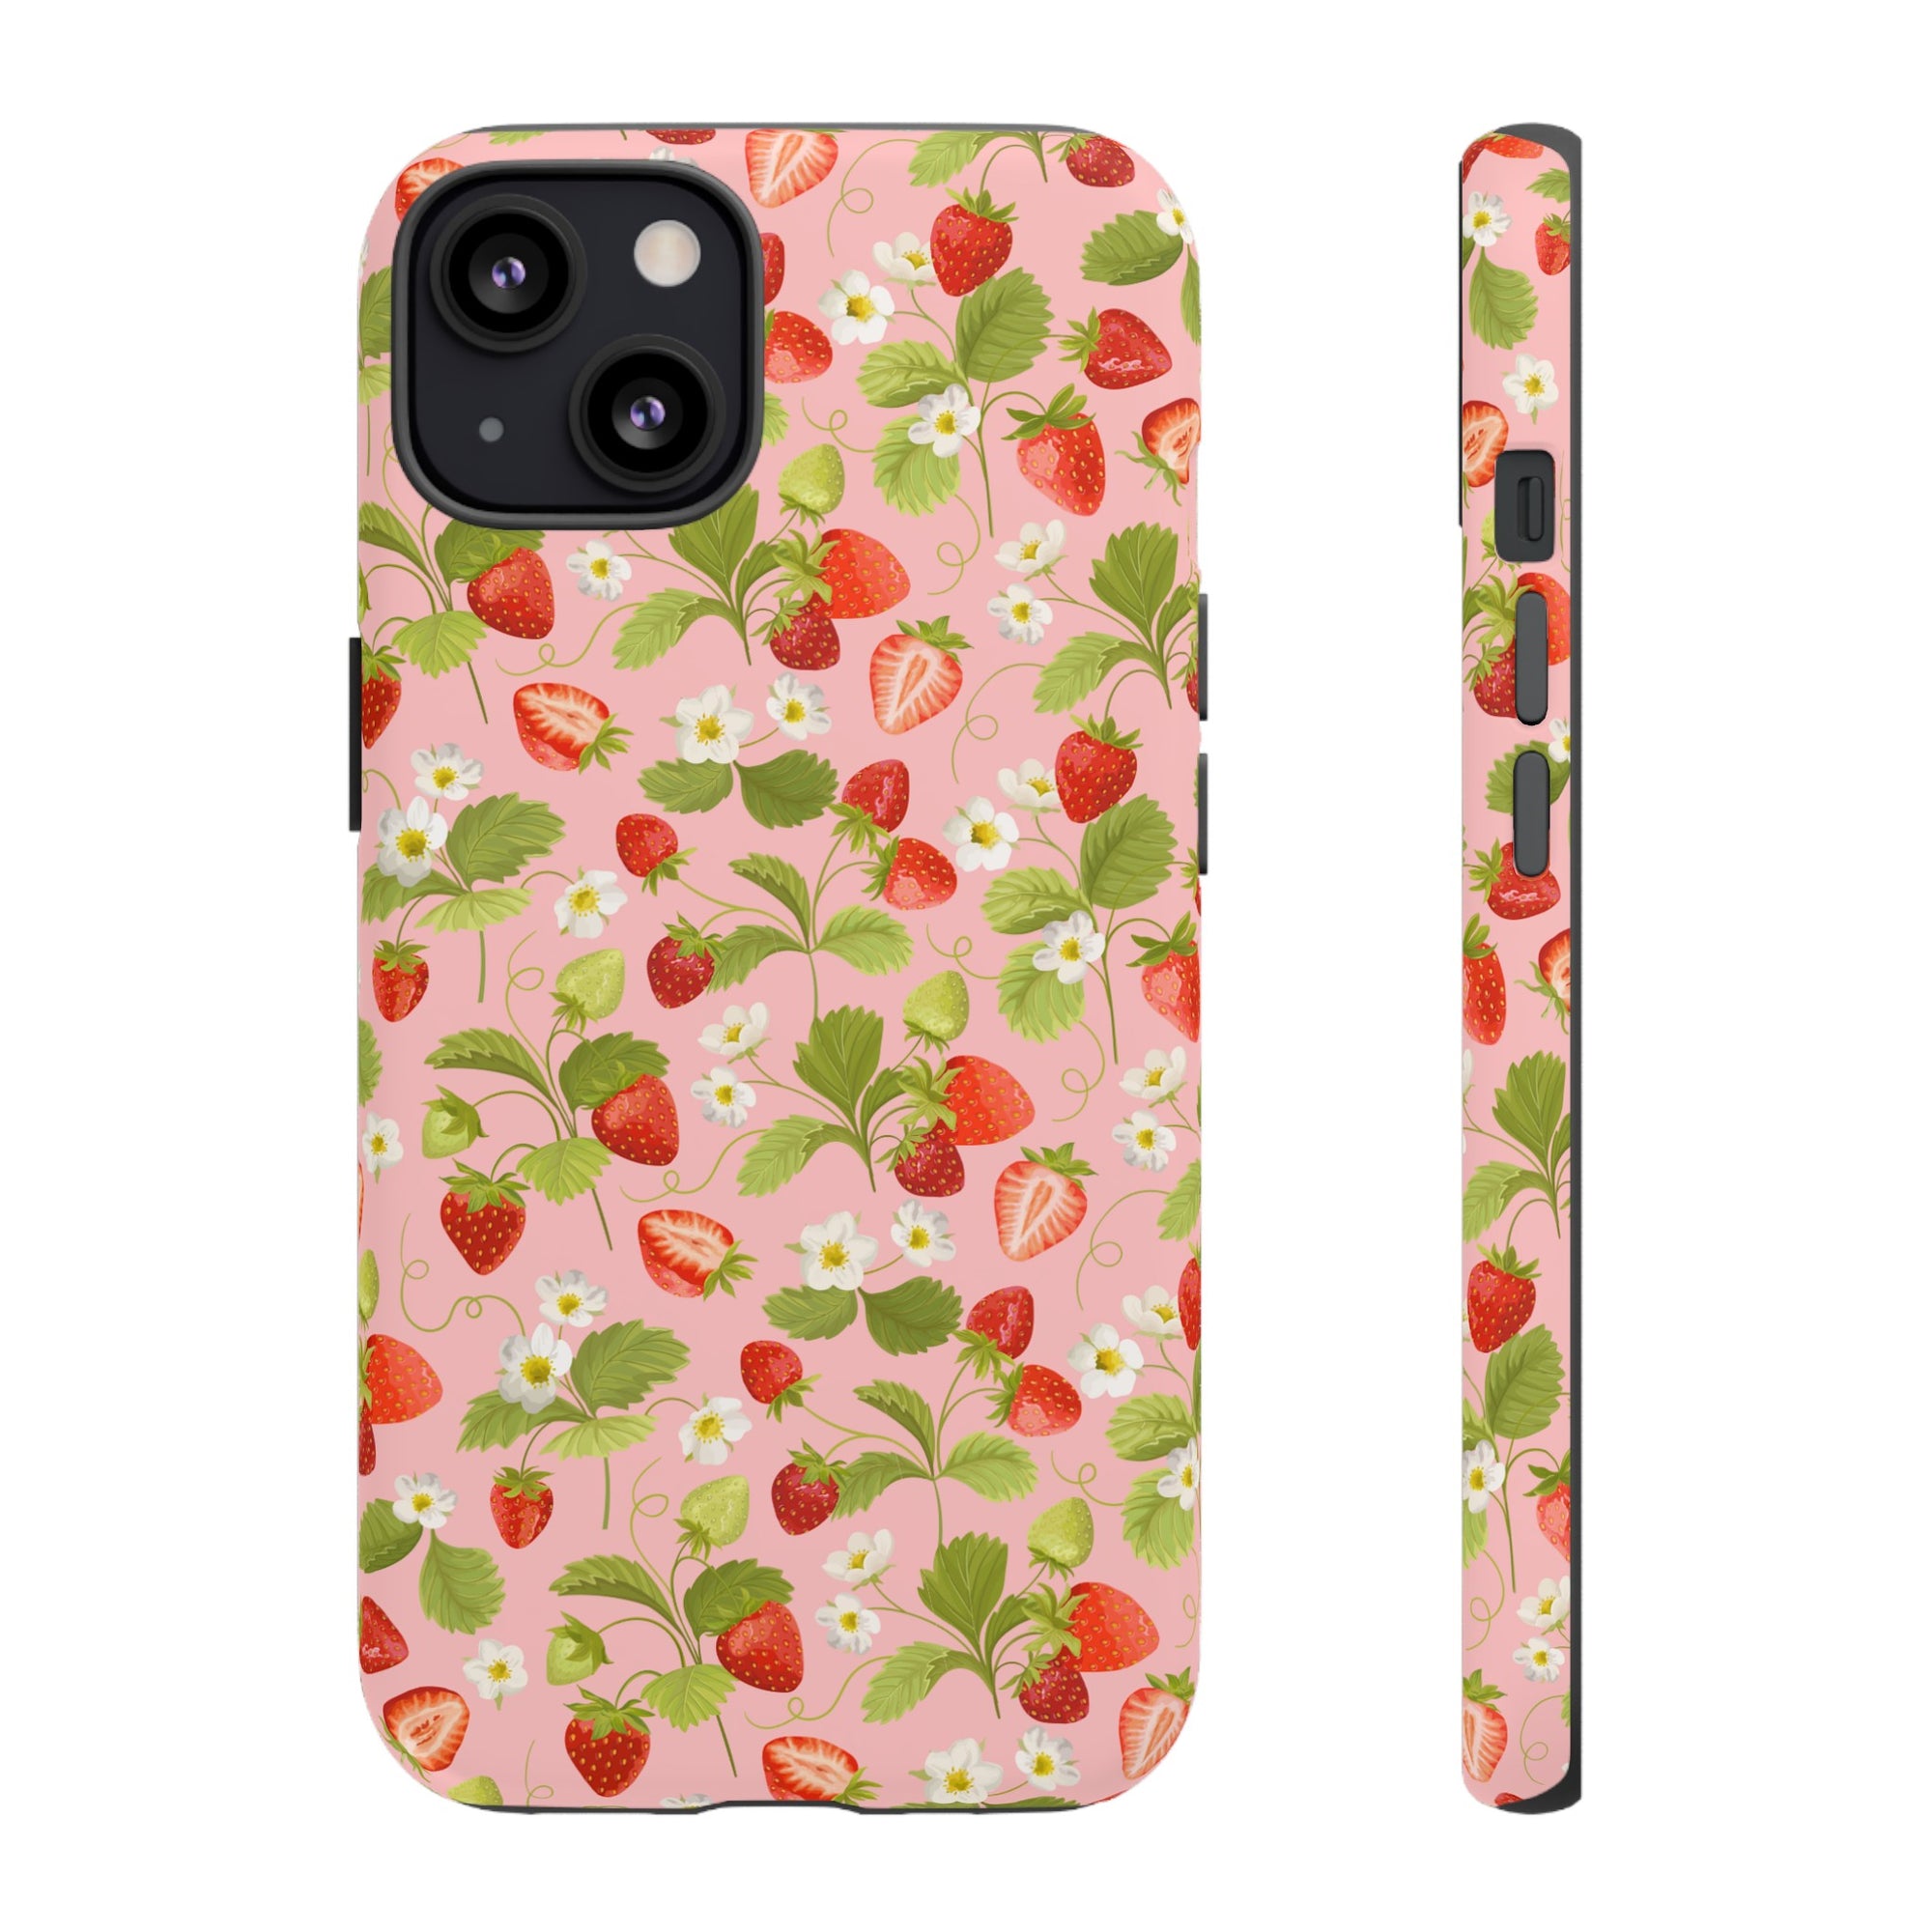 Strawberry Summer iPhone Case